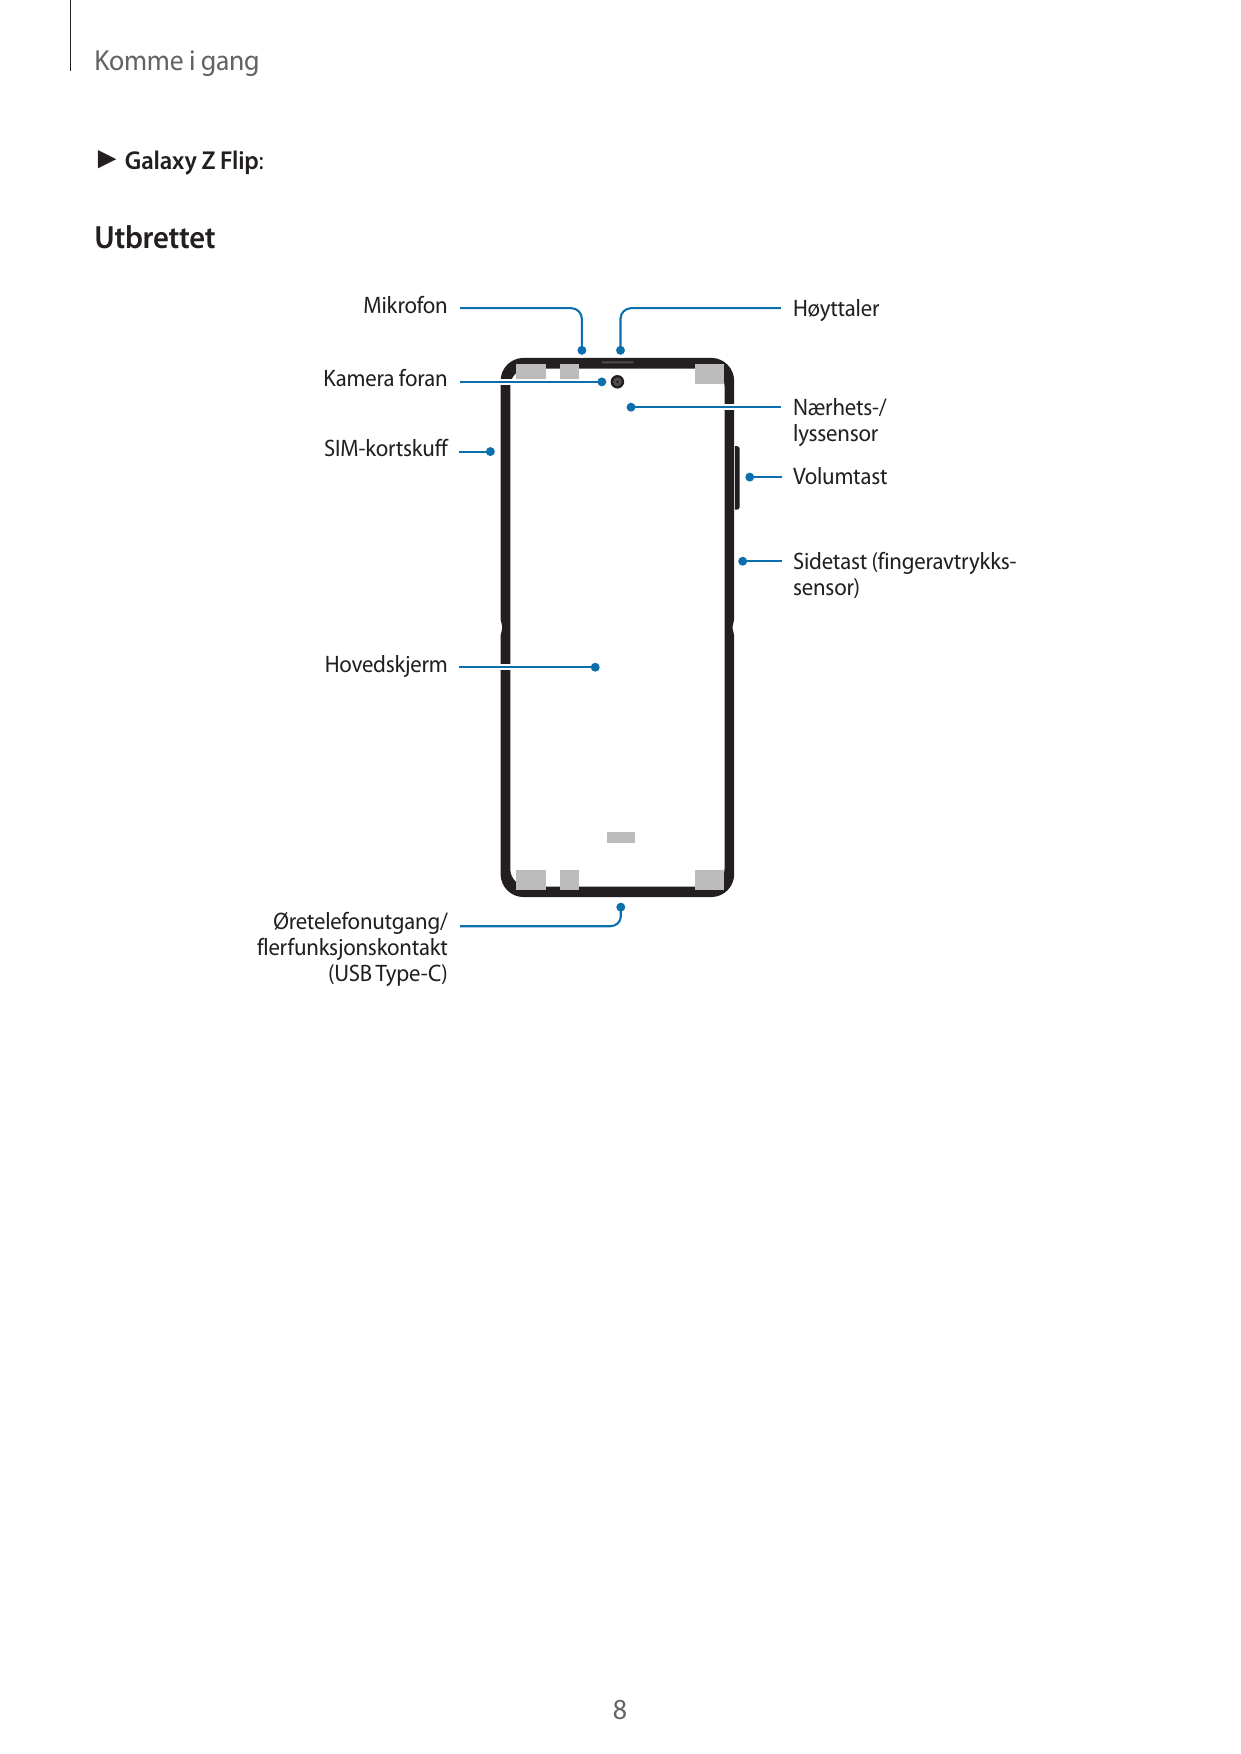 Komme i gang► Galaxy Z Flip:UtbrettetMikrofonHøyttalerKamera foranNærhets-/lyssensorSIM-kortskuffVolumtastSidetast (fingeravtryk